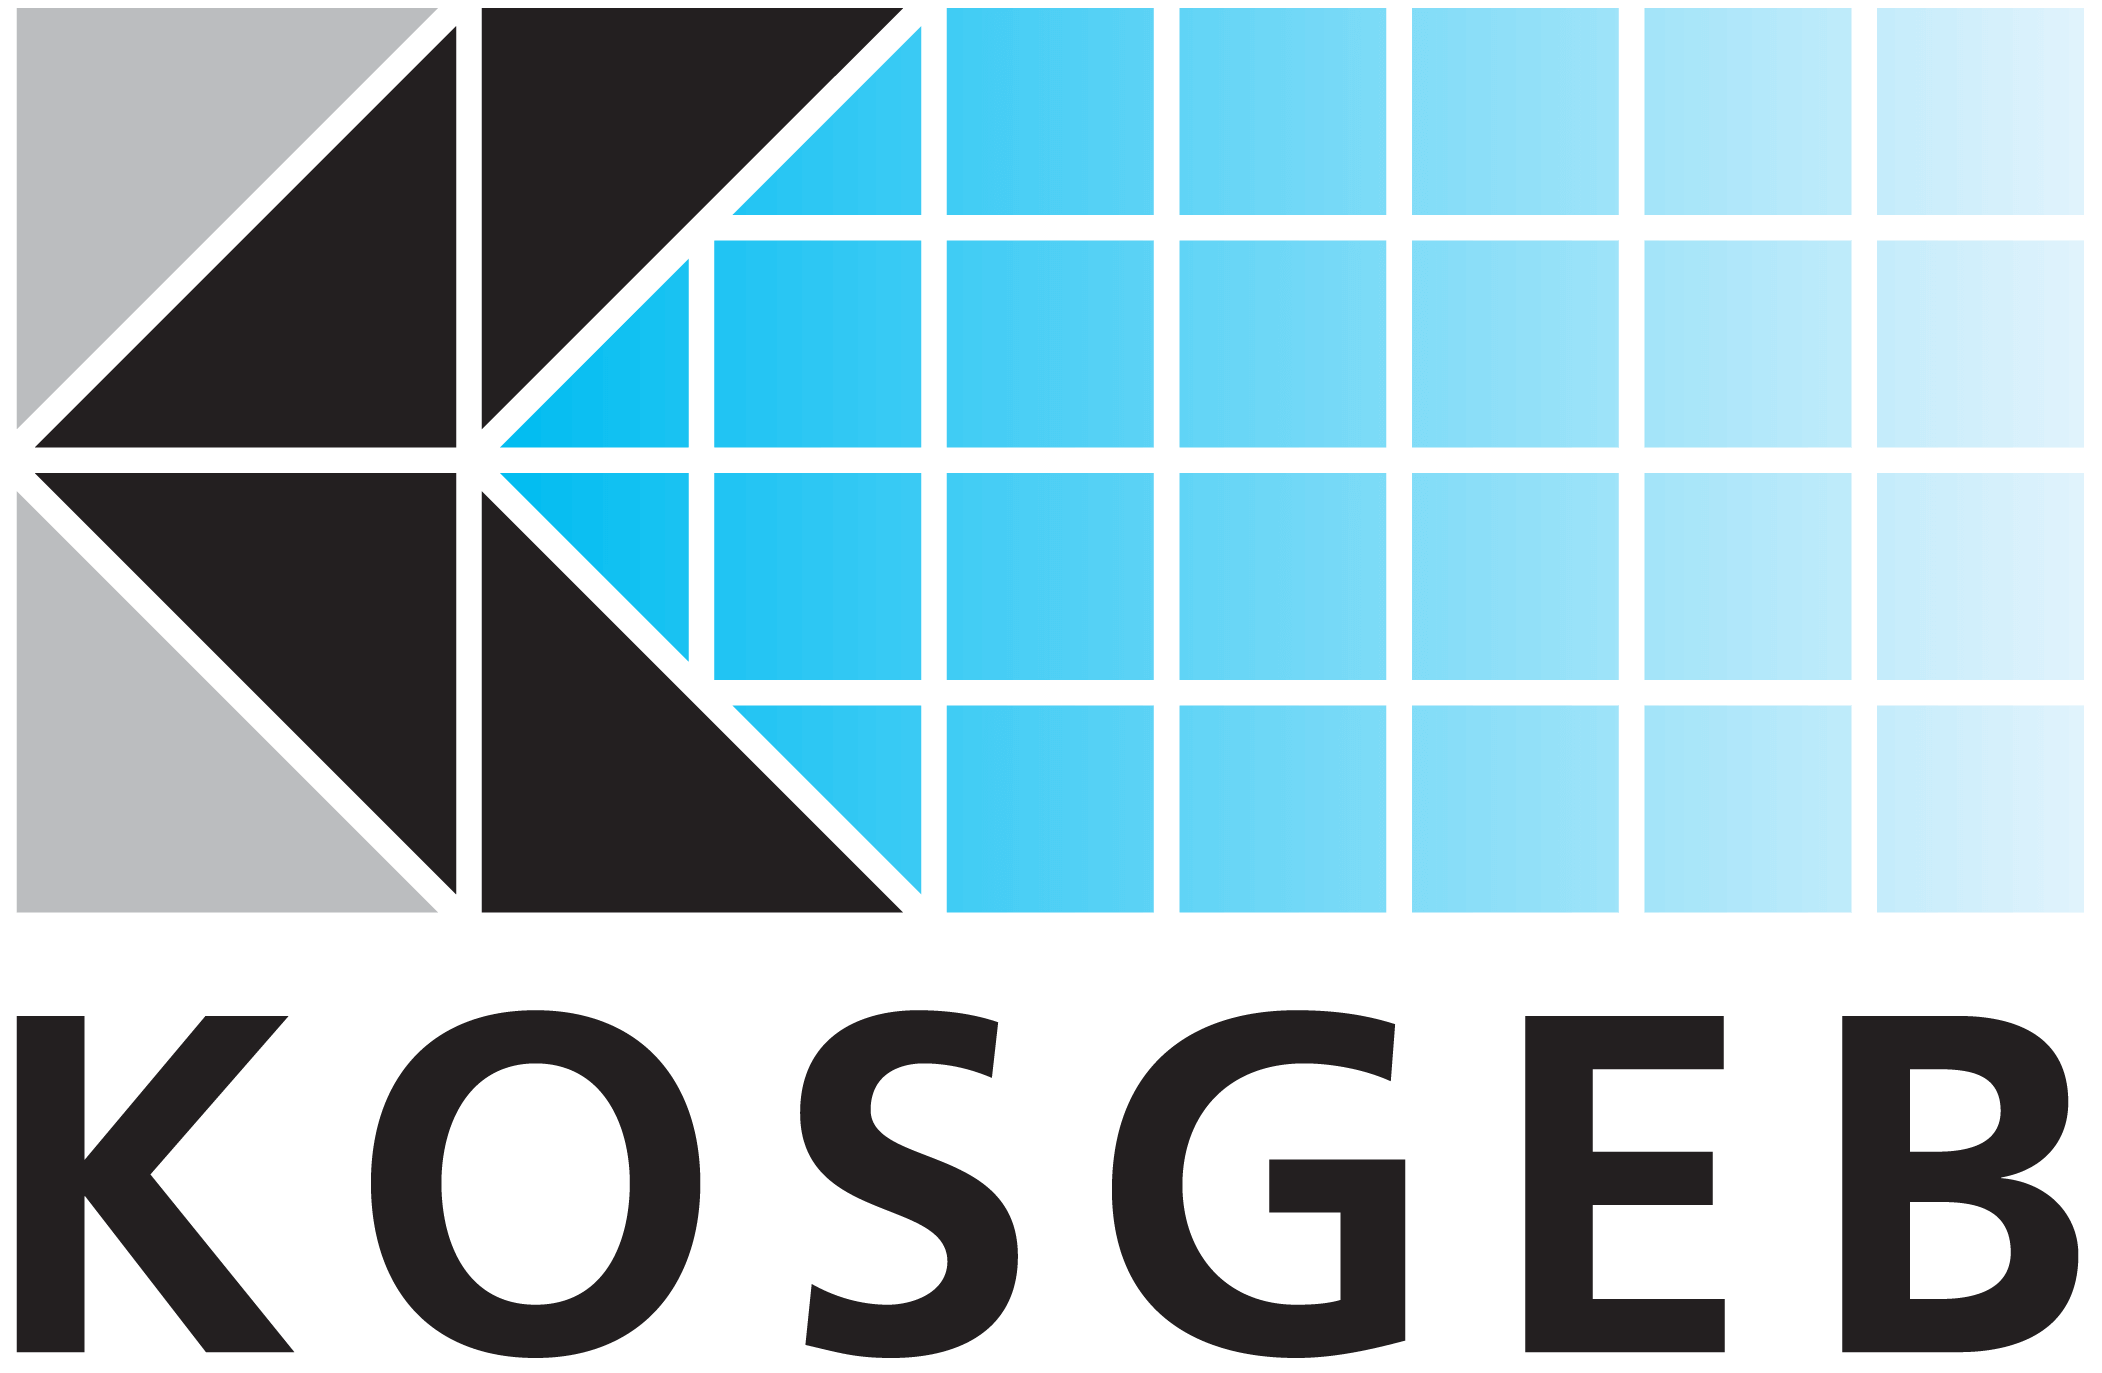 KOSGEB-Small and Medium Enterprises Development Organization of Turkiye